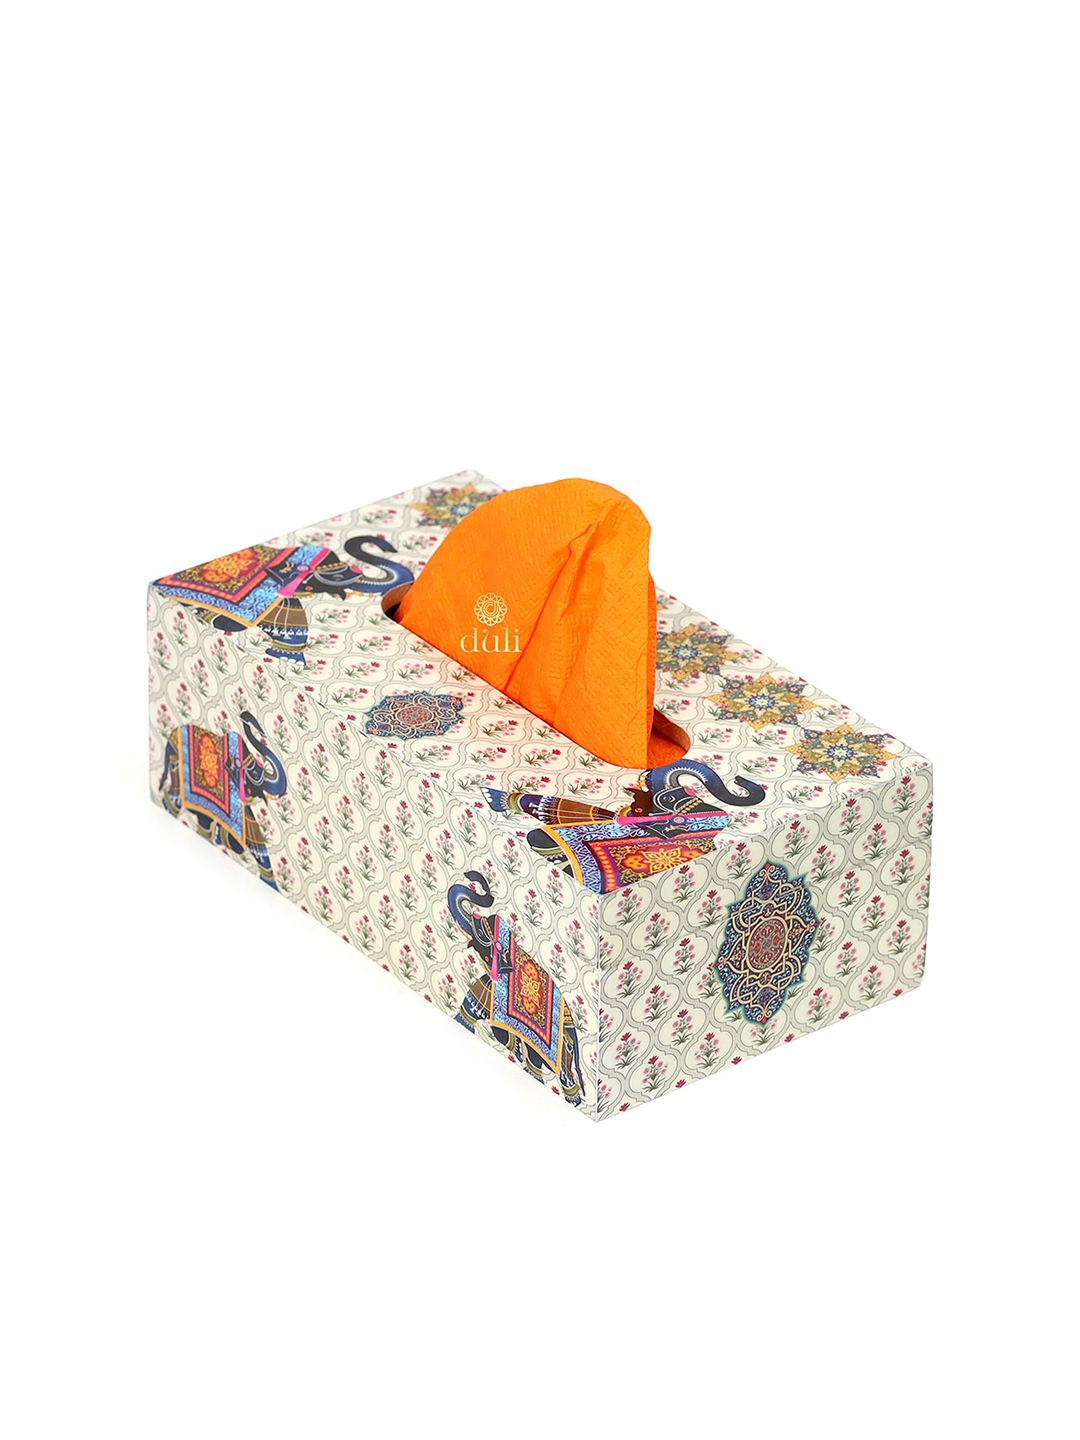 DULI  Multi Printed Tissue Box Holder Price in India